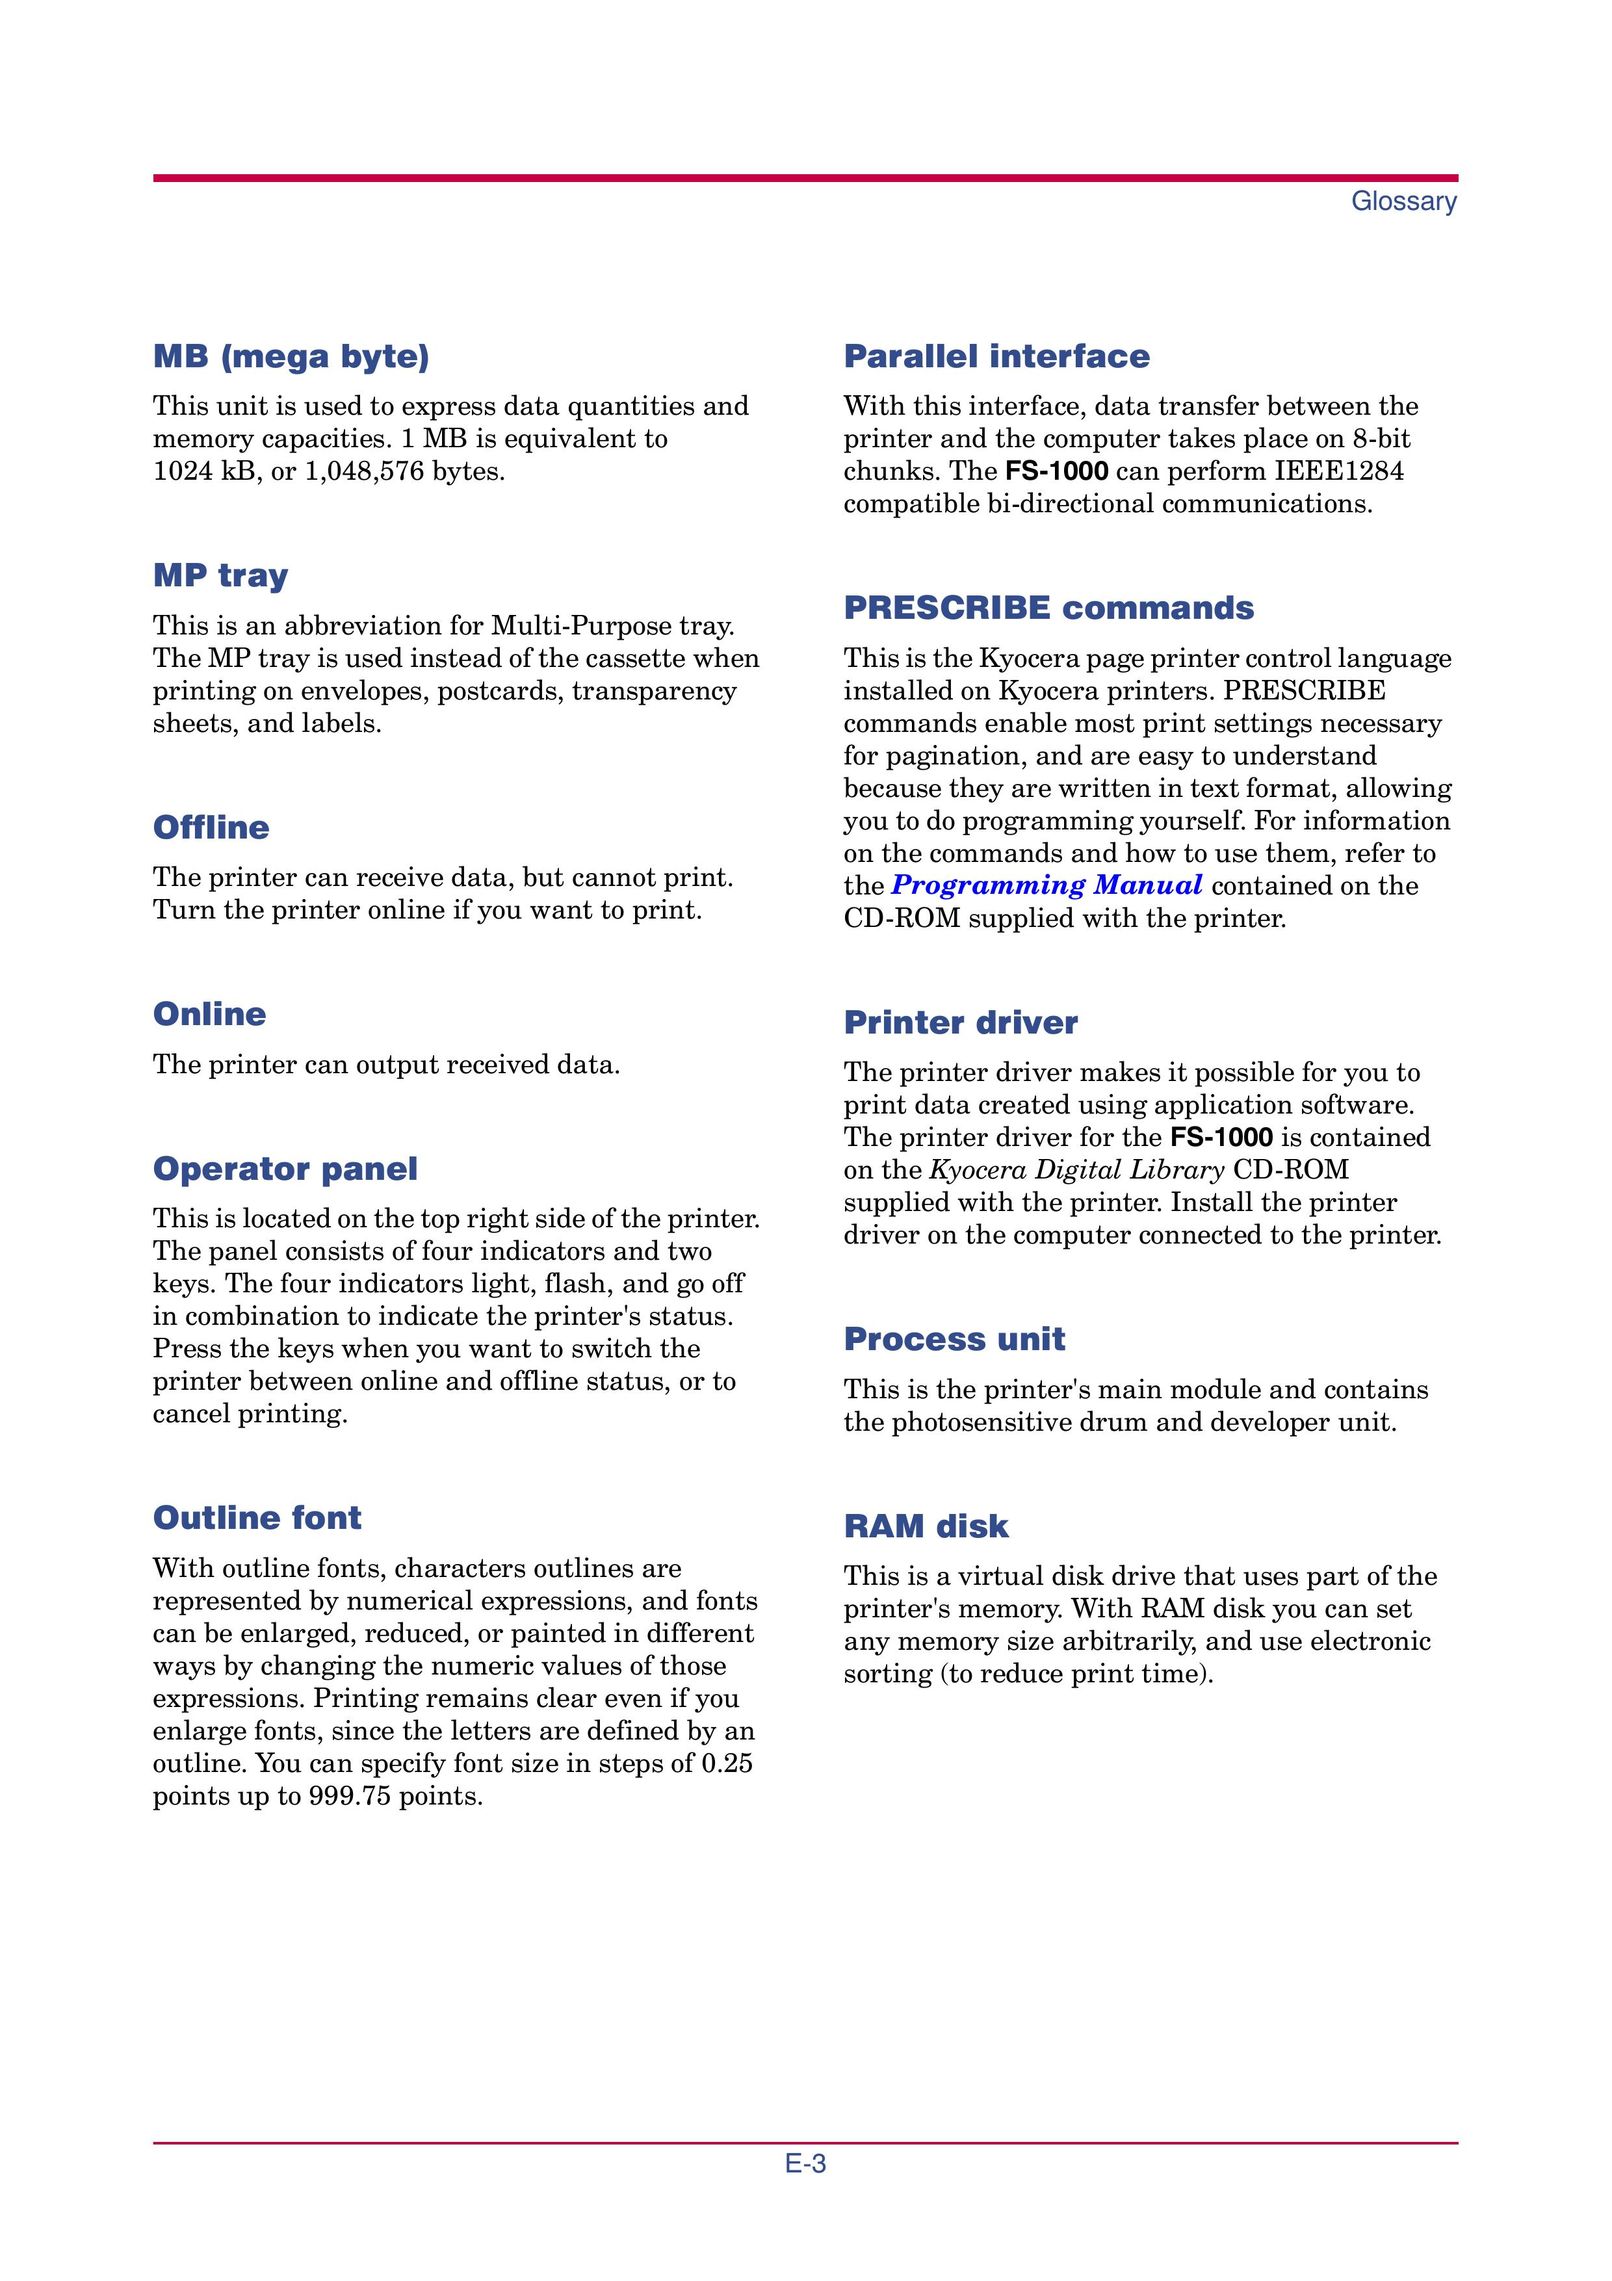 Kyocera FS-1000 Printer User Manual (Page 132)